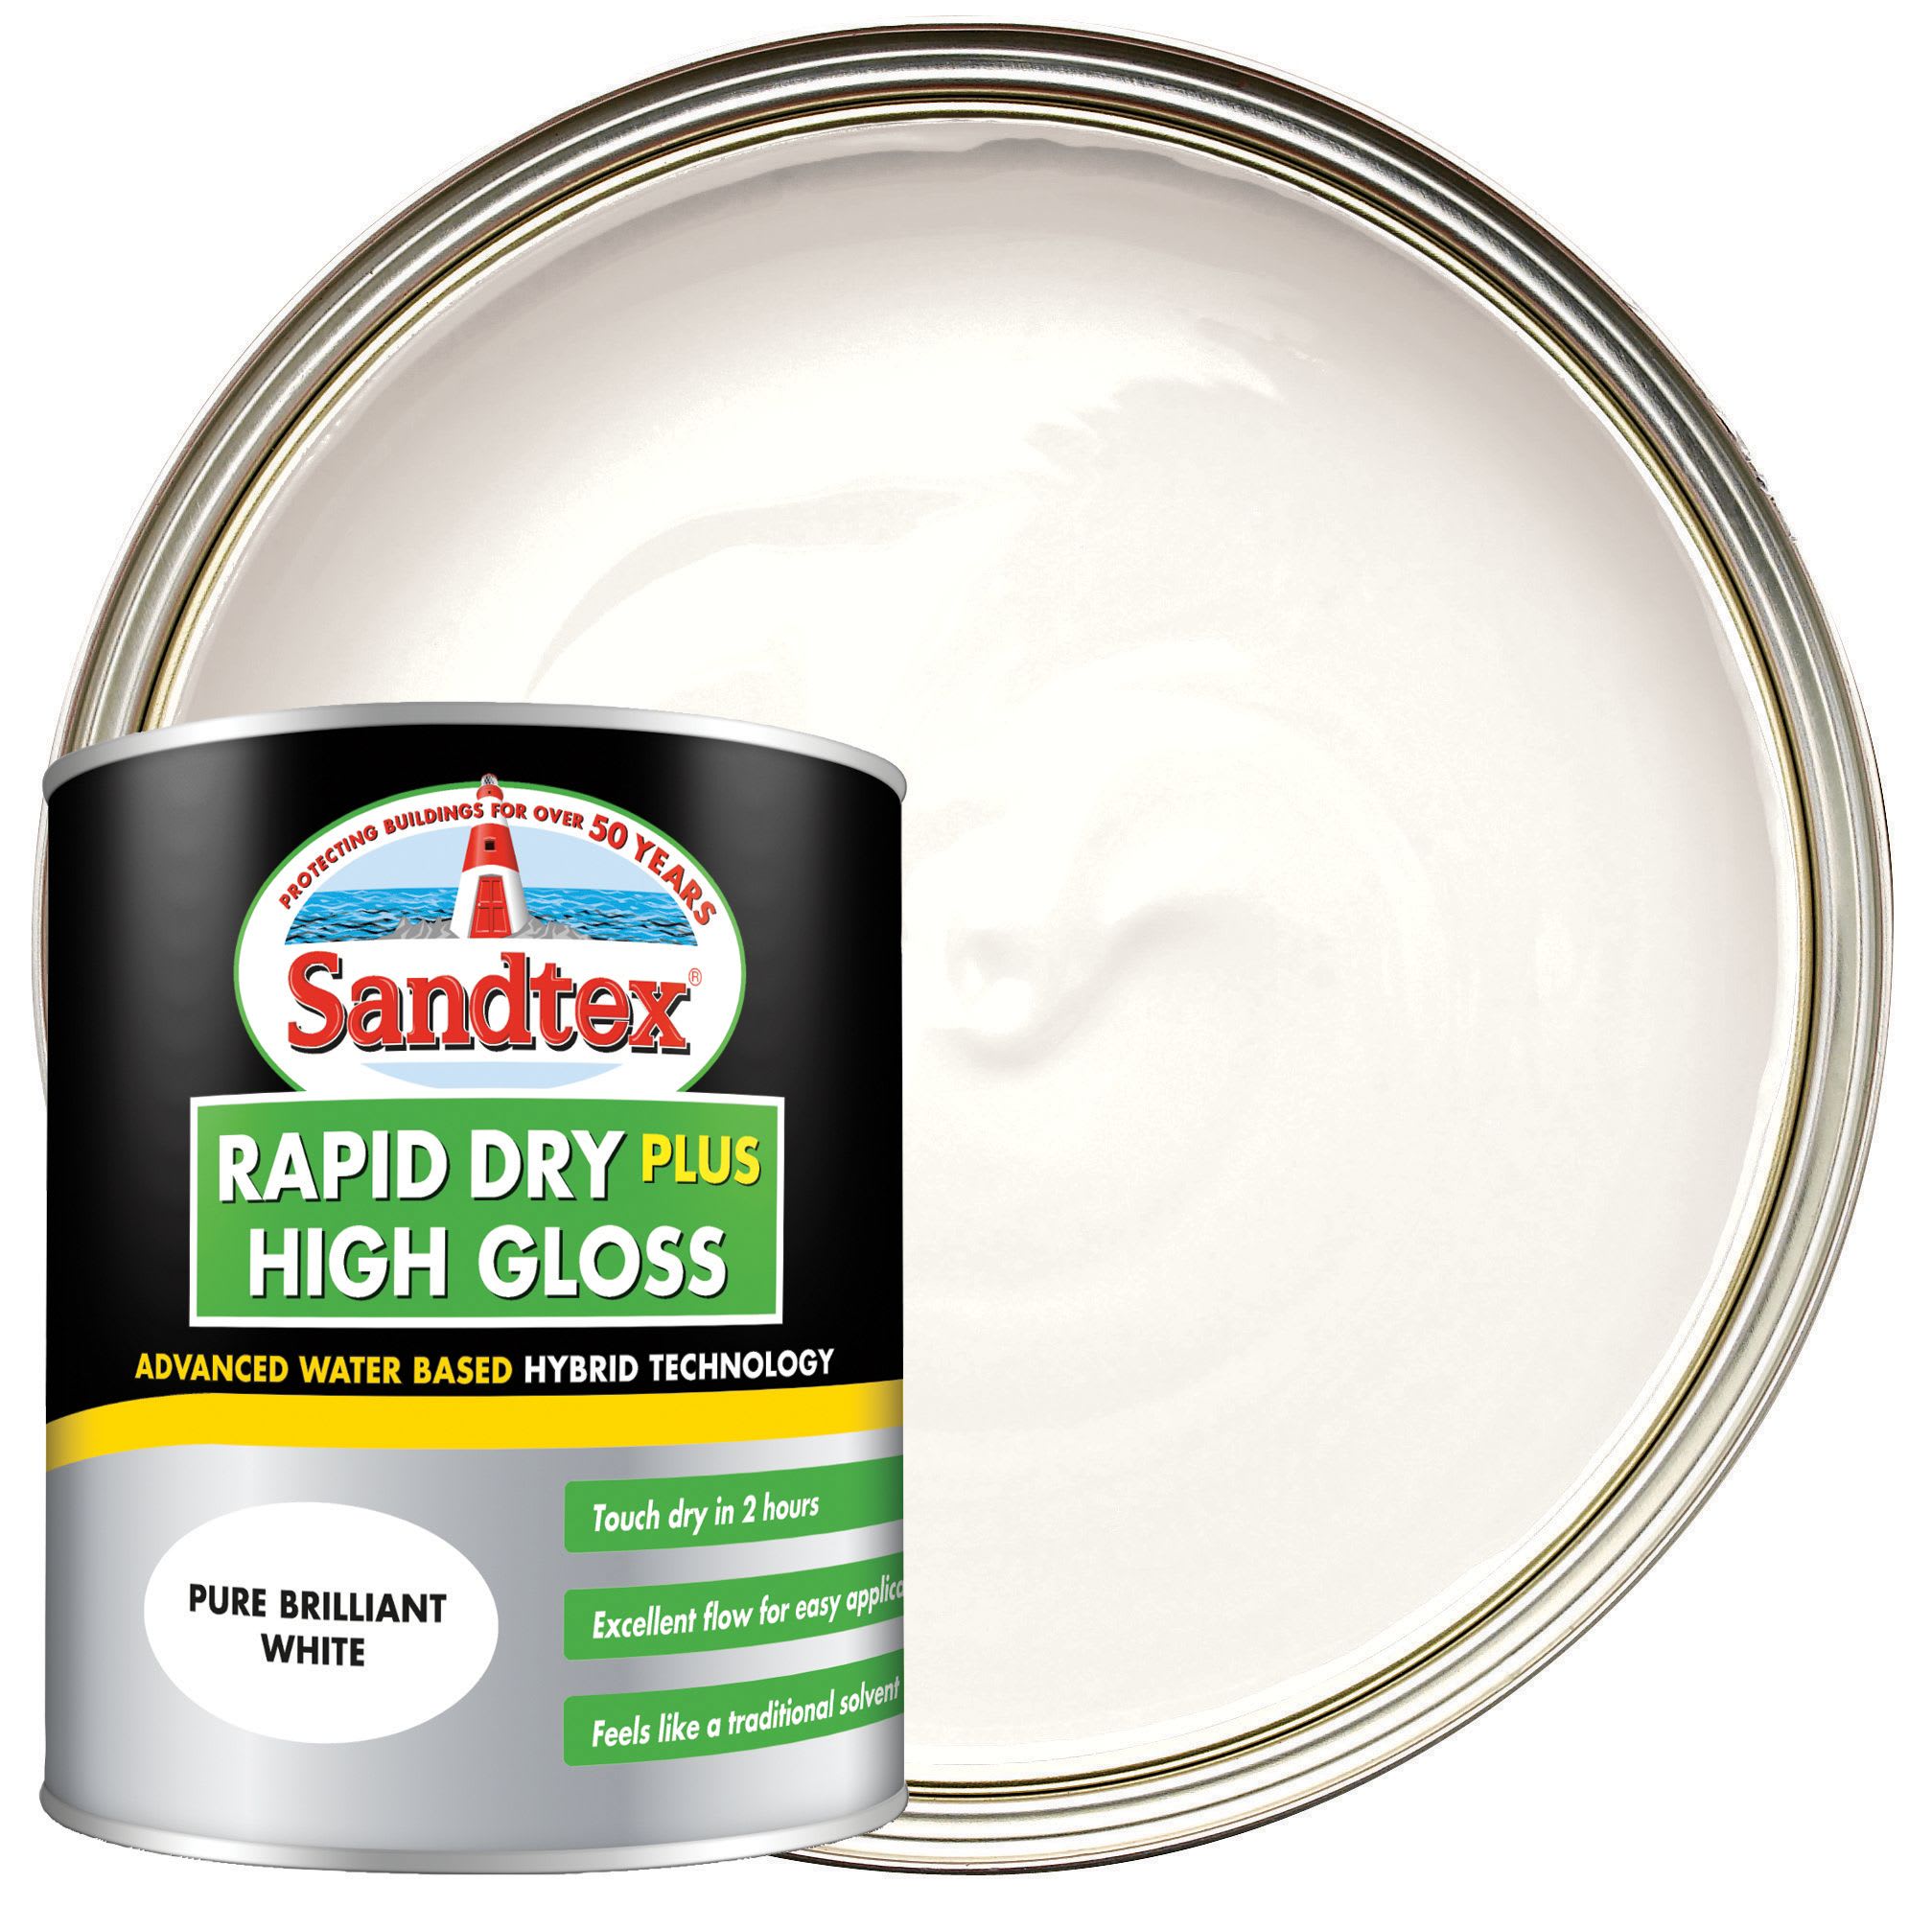 Sandtex Rapid Dry Plus High Gloss Paint -